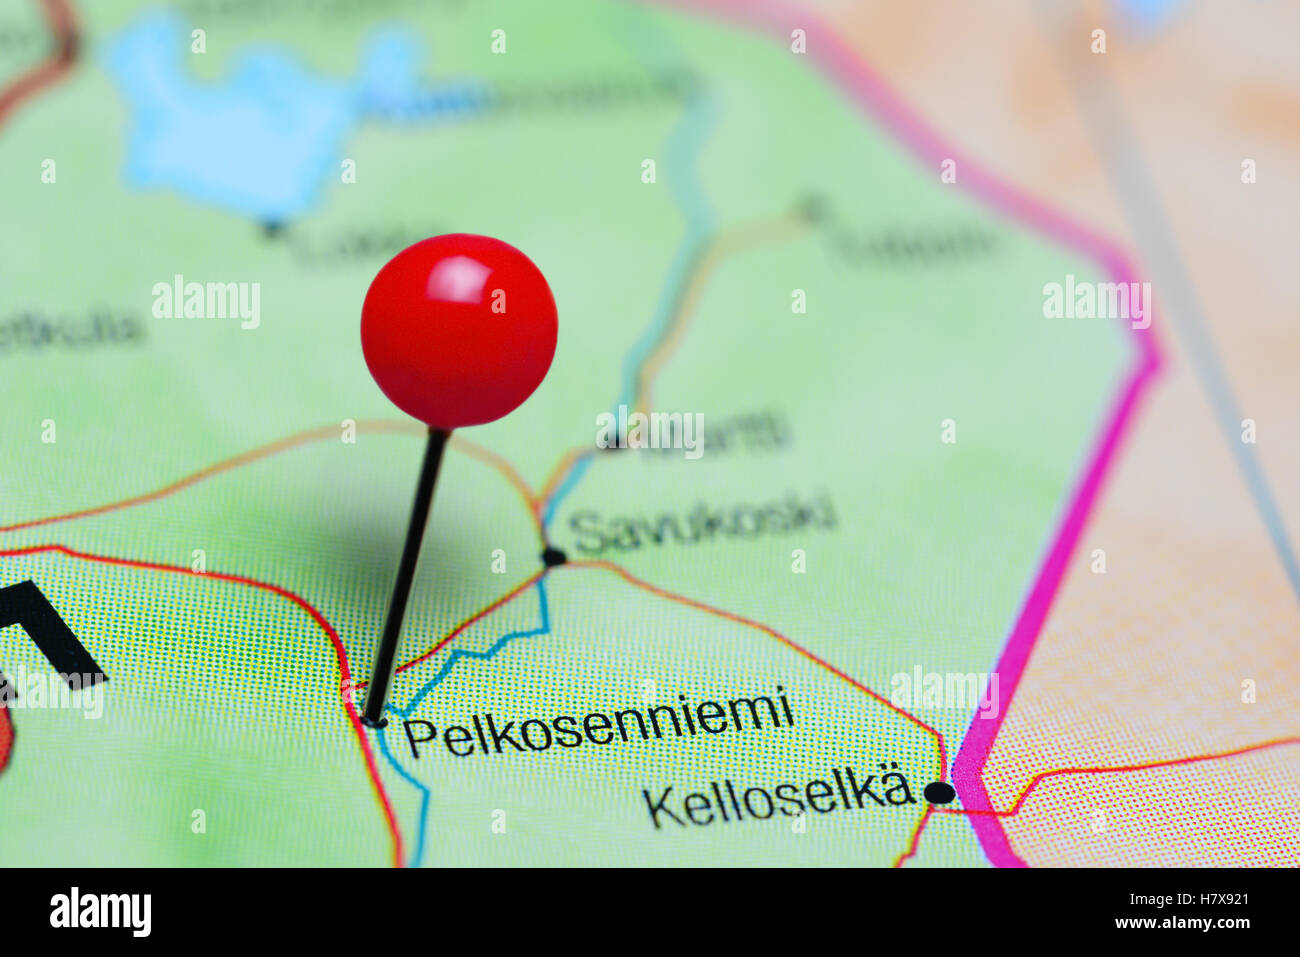 Pelkosenniemi pinned on a map of Finland Stock Photo